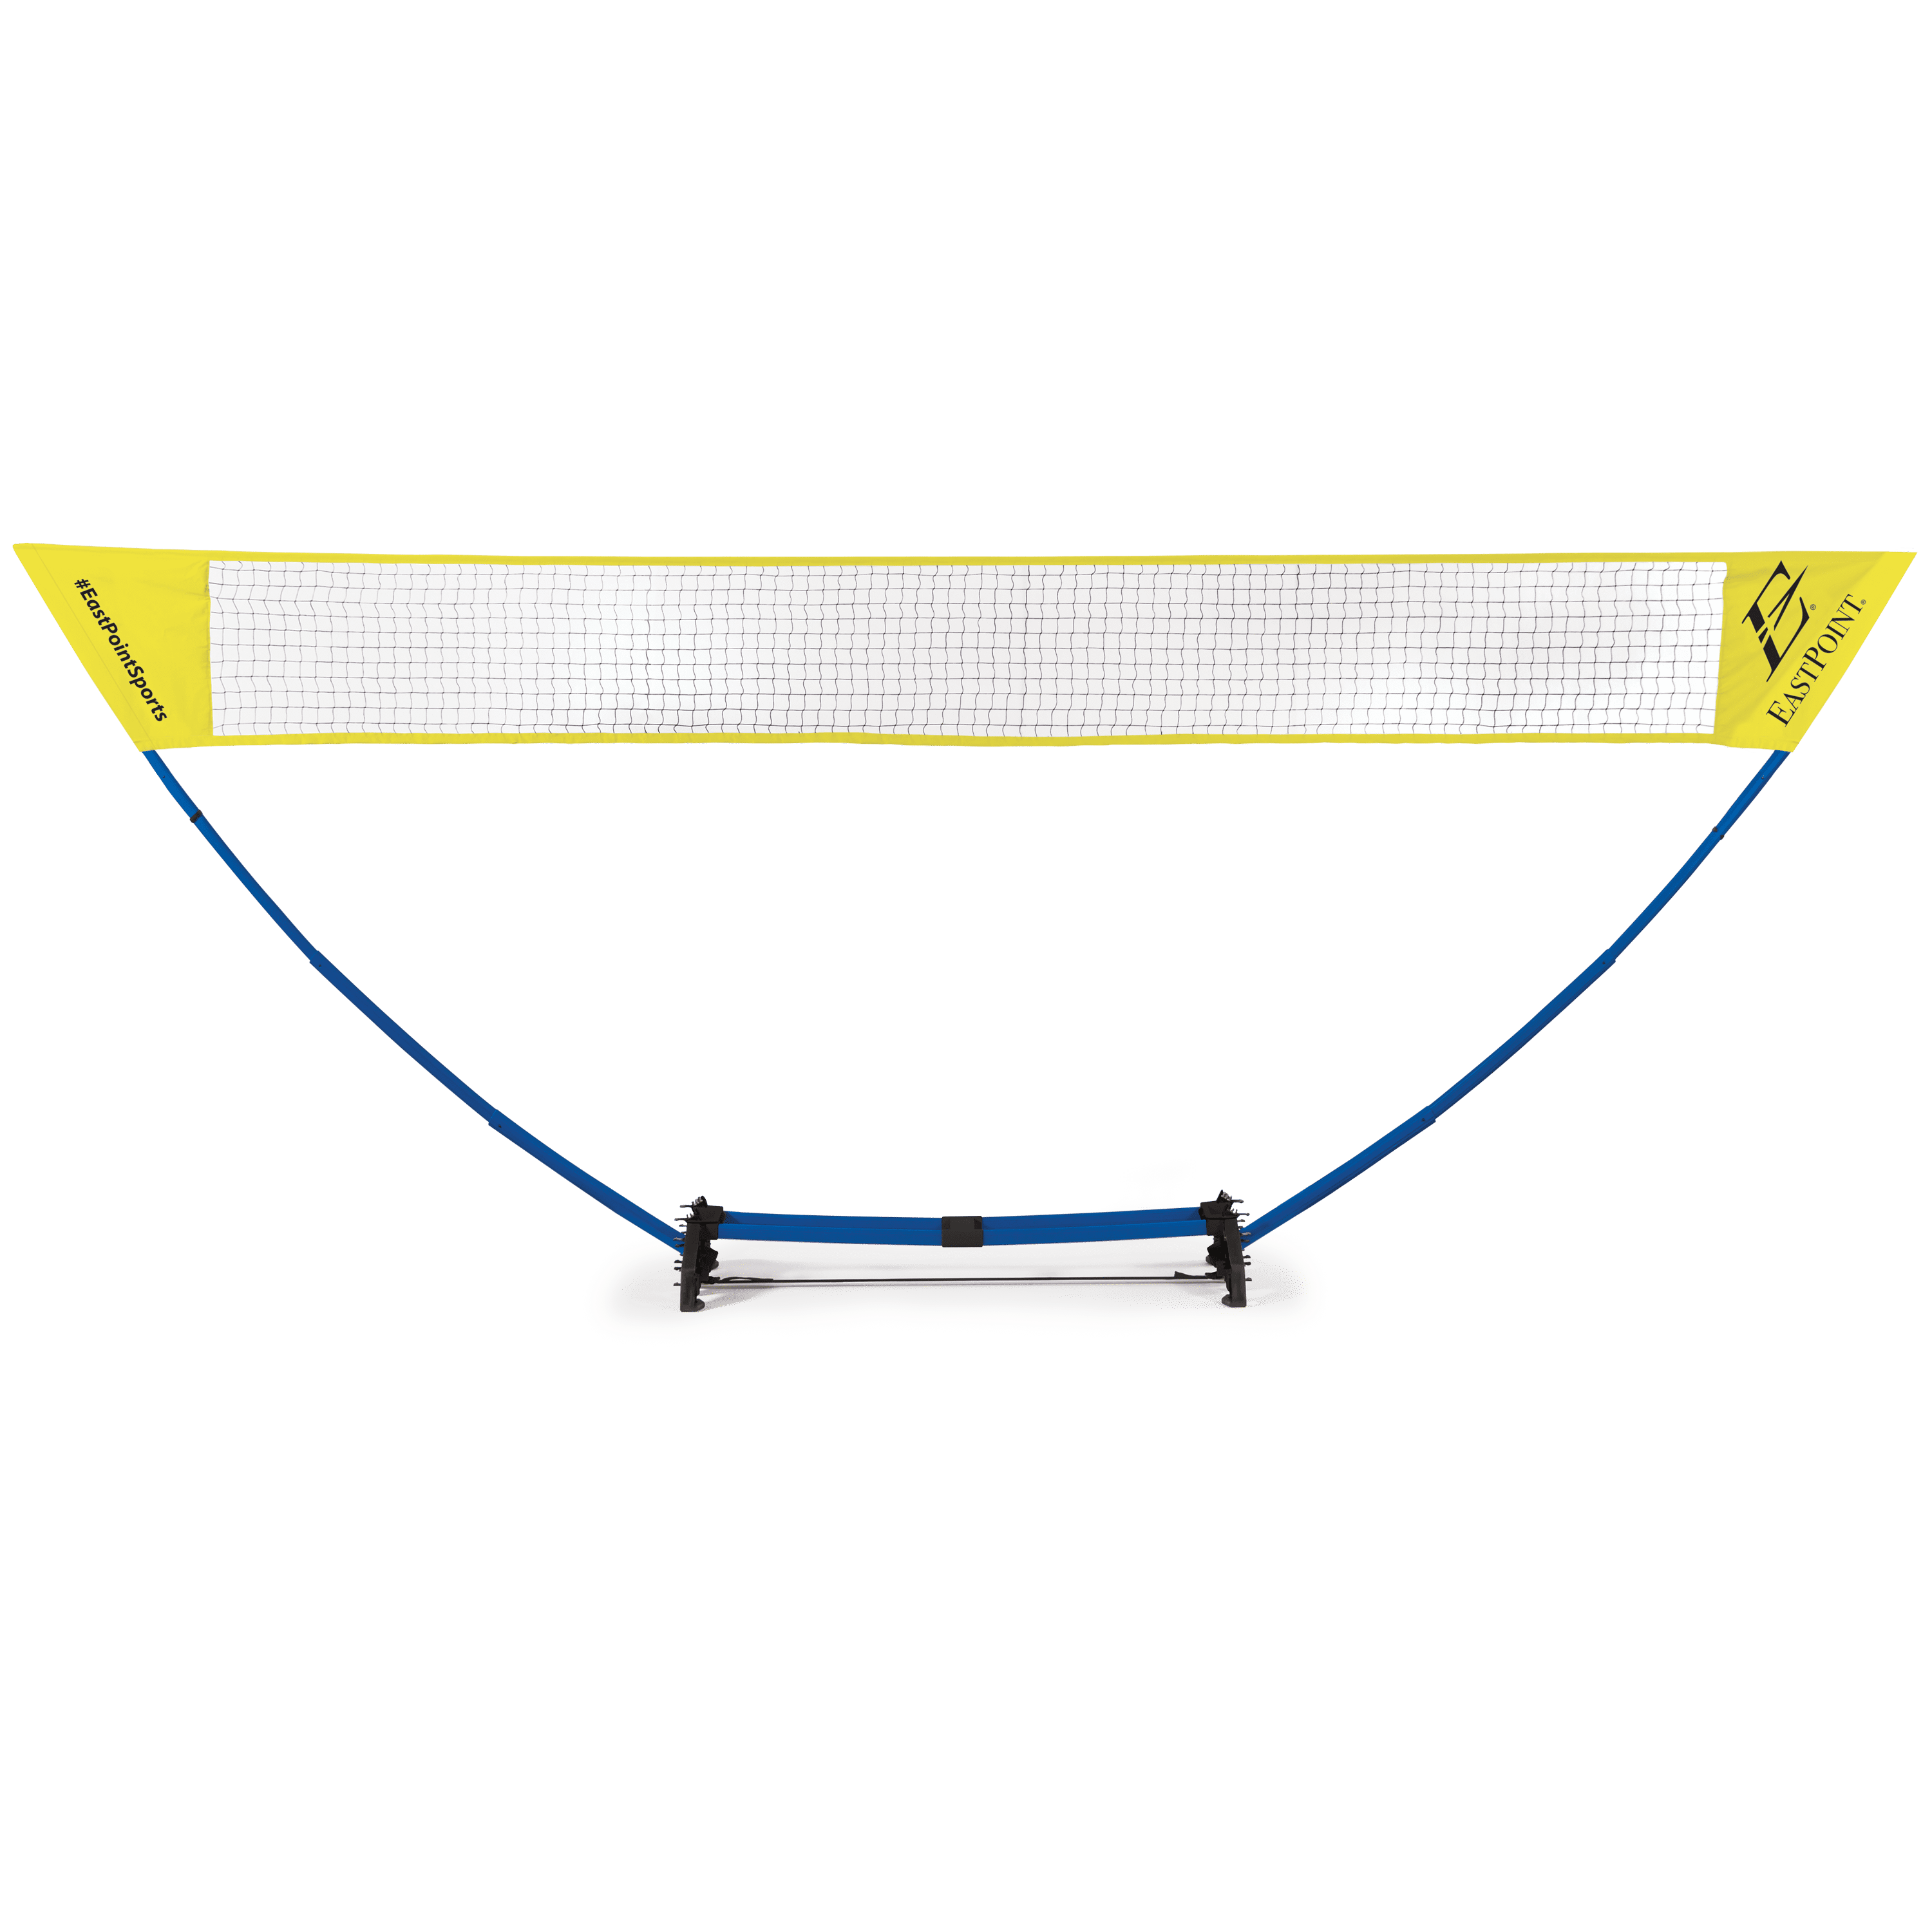 21A Badminton EastPoint Sports Easy Setup Regulation Size Set,Minor Box damaged 